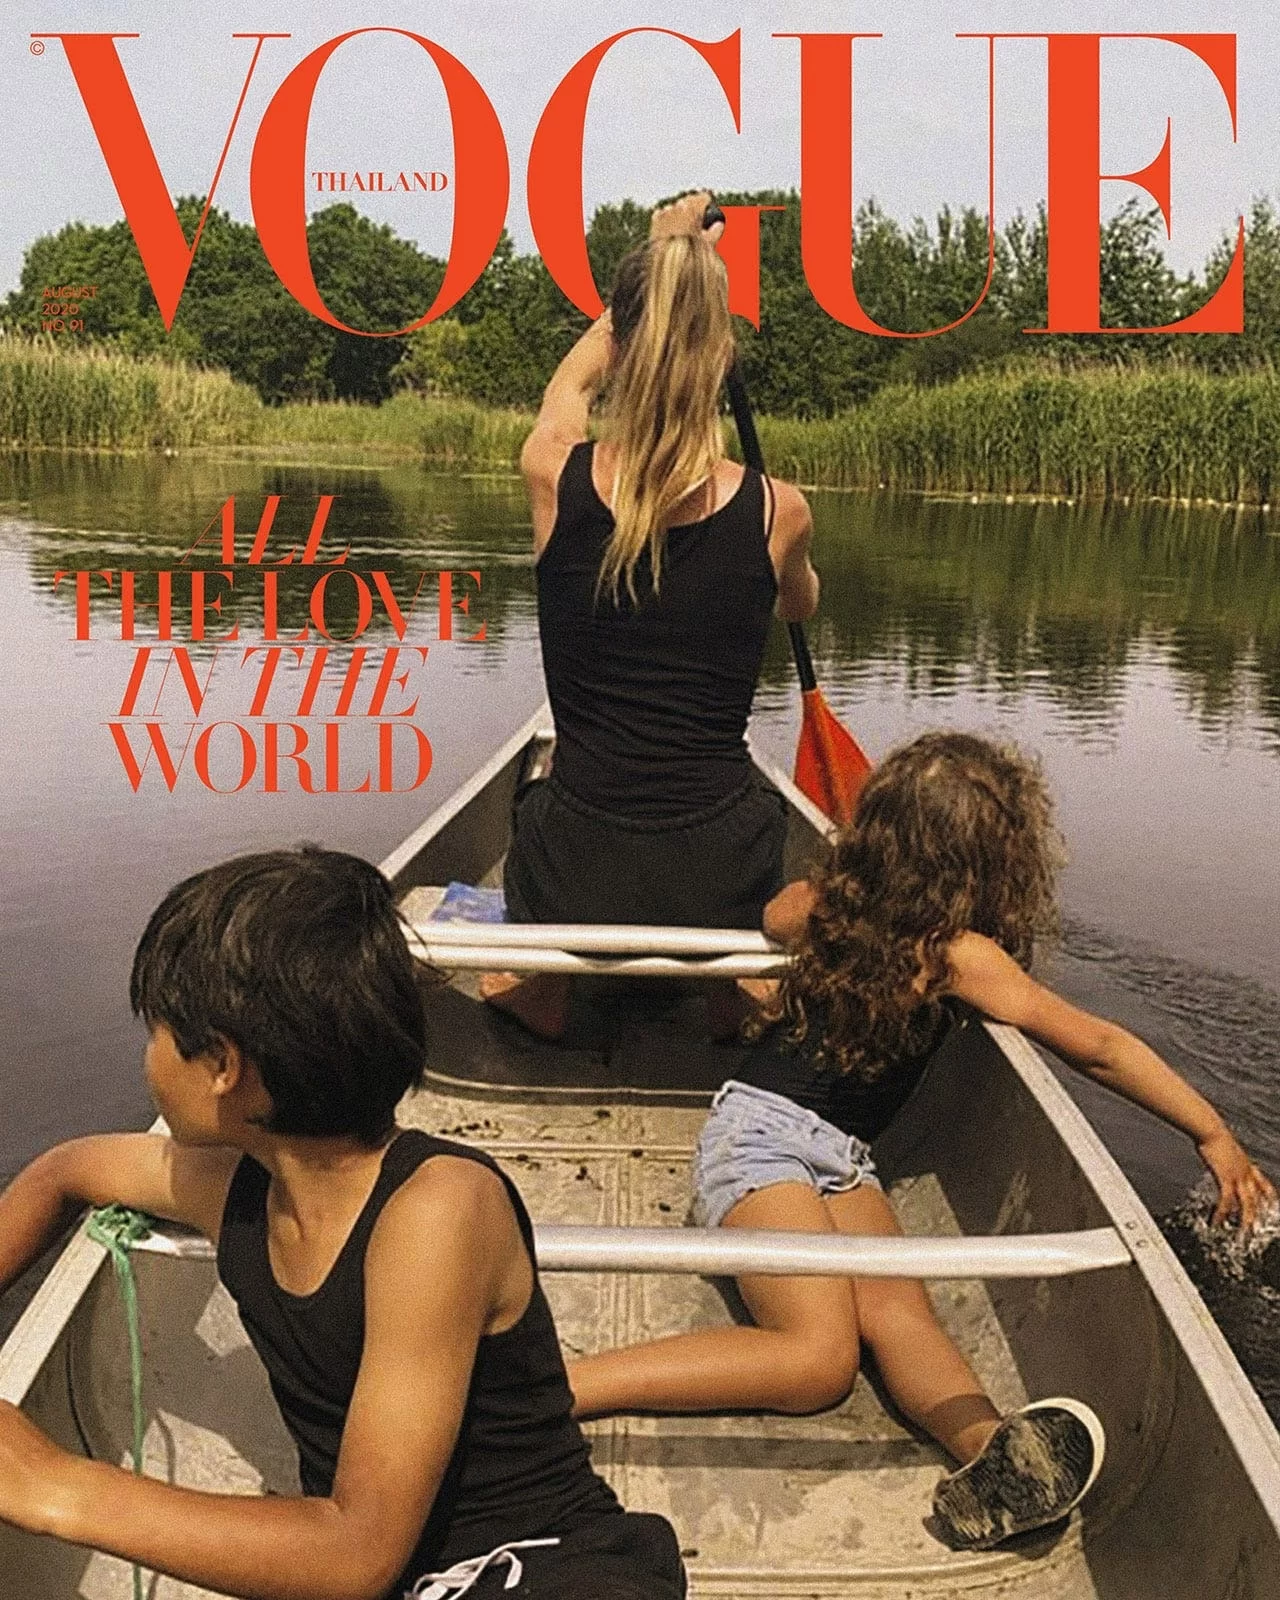 Vogue Thailand 1 by Joseph DEGBADJO